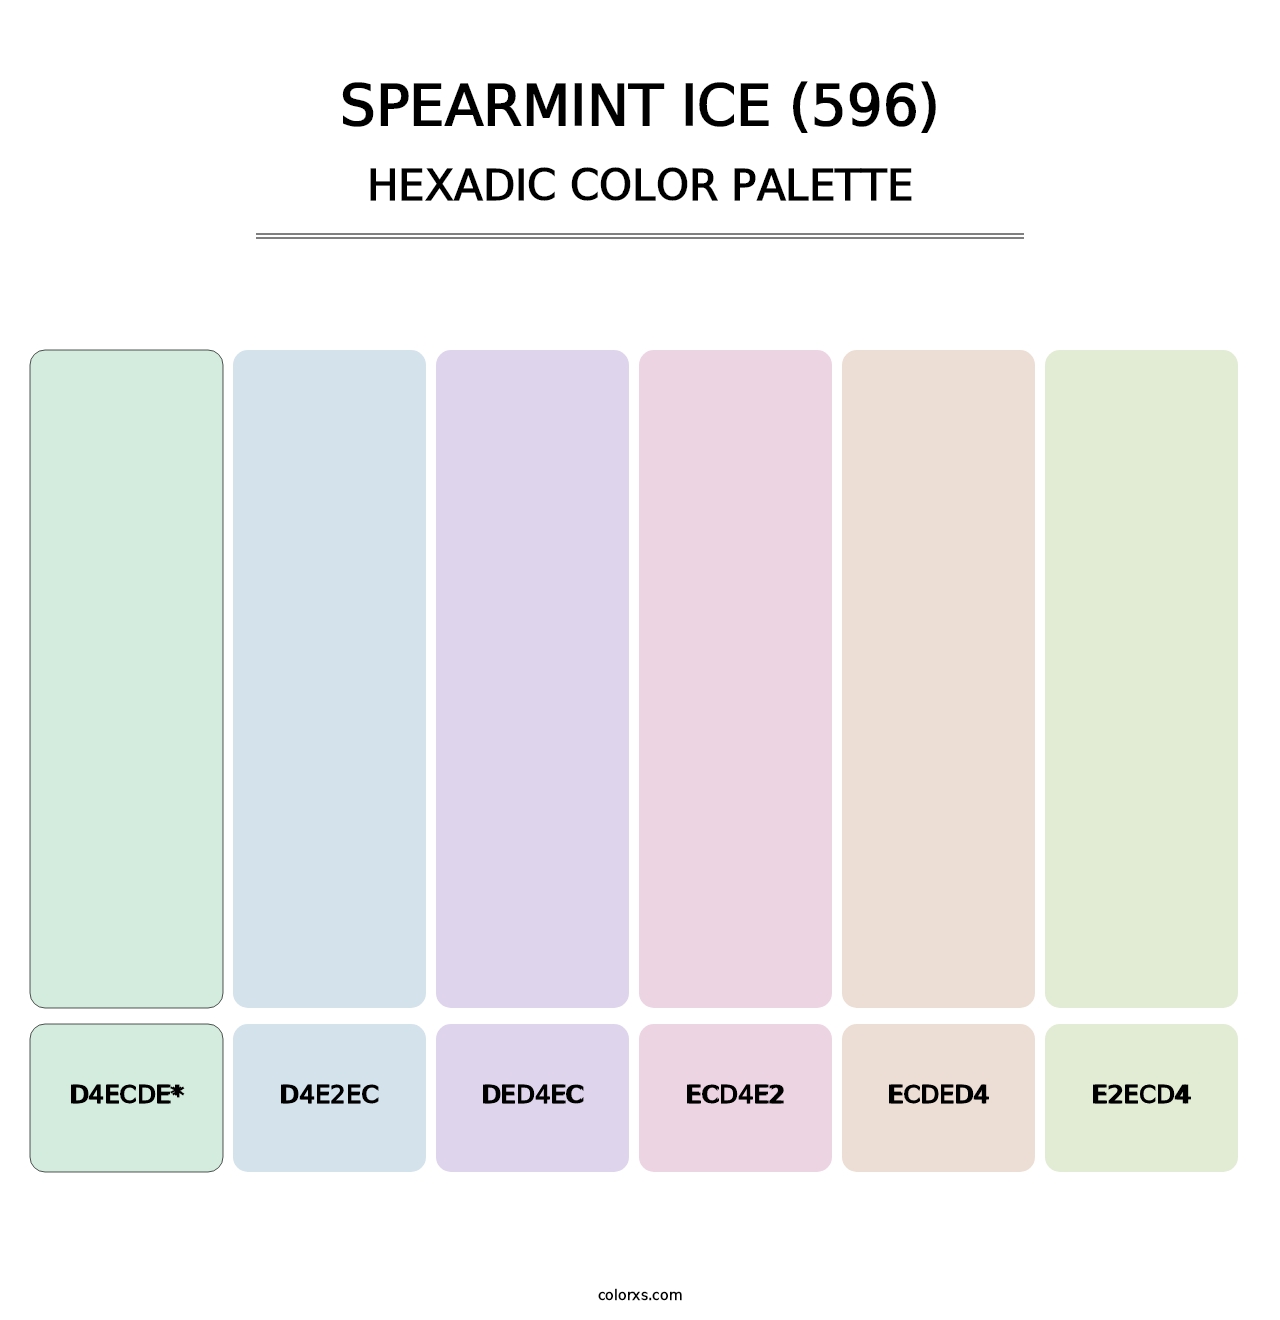 Spearmint Ice (596) - Hexadic Color Palette